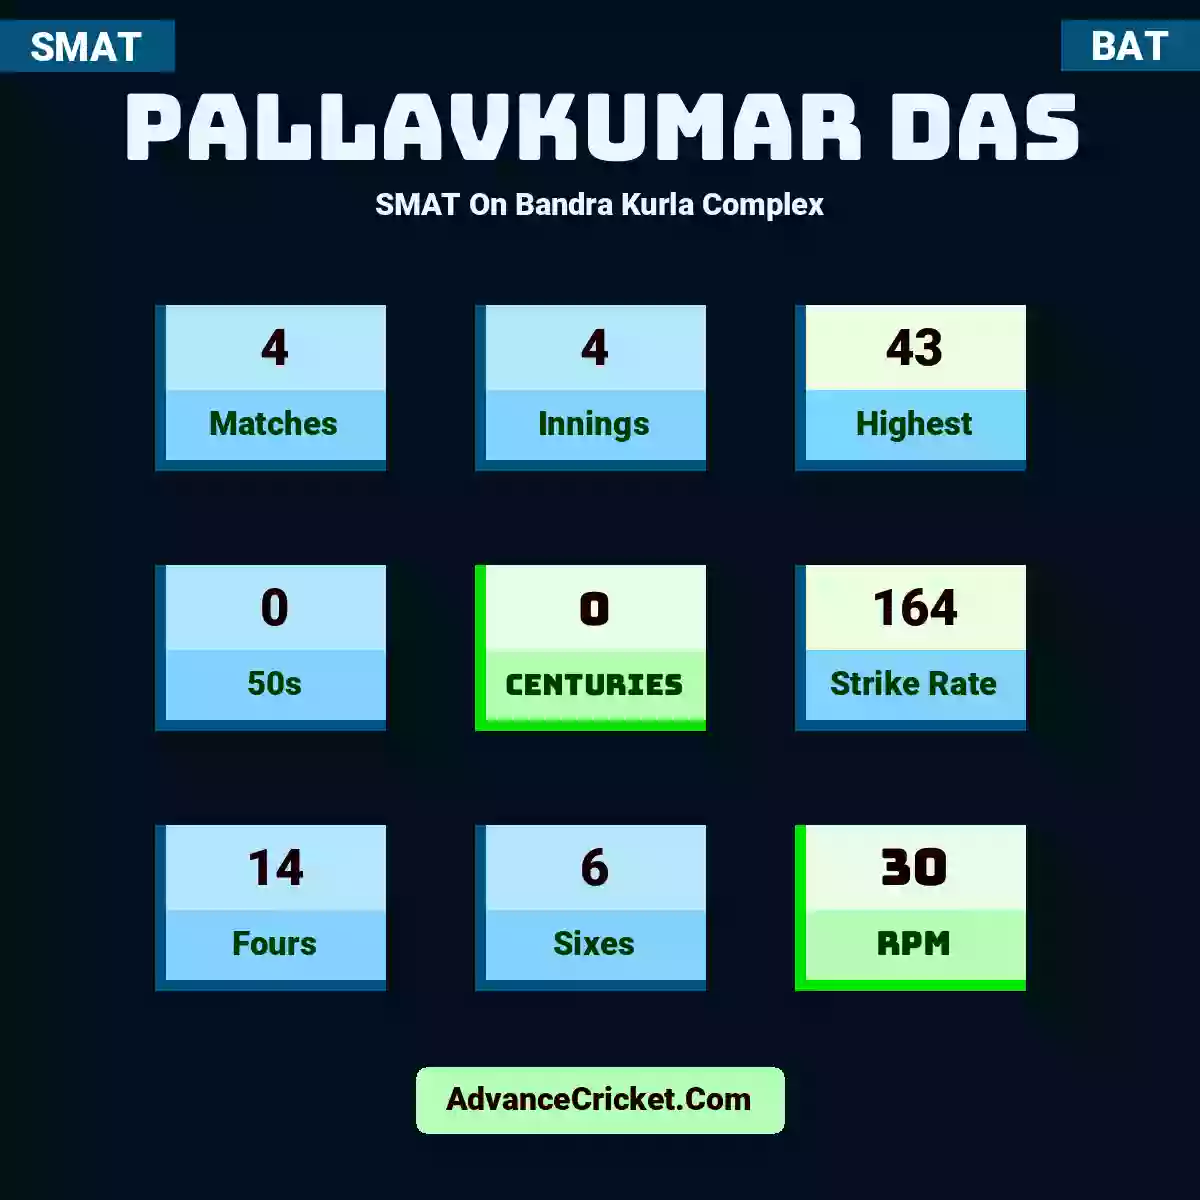 Pallavkumar Das SMAT  On Bandra Kurla Complex, Pallavkumar Das played 4 matches, scored 43 runs as highest, 0 half-centuries, and 0 centuries, with a strike rate of 164. P.Das hit 14 fours and 6 sixes, with an RPM of 30.